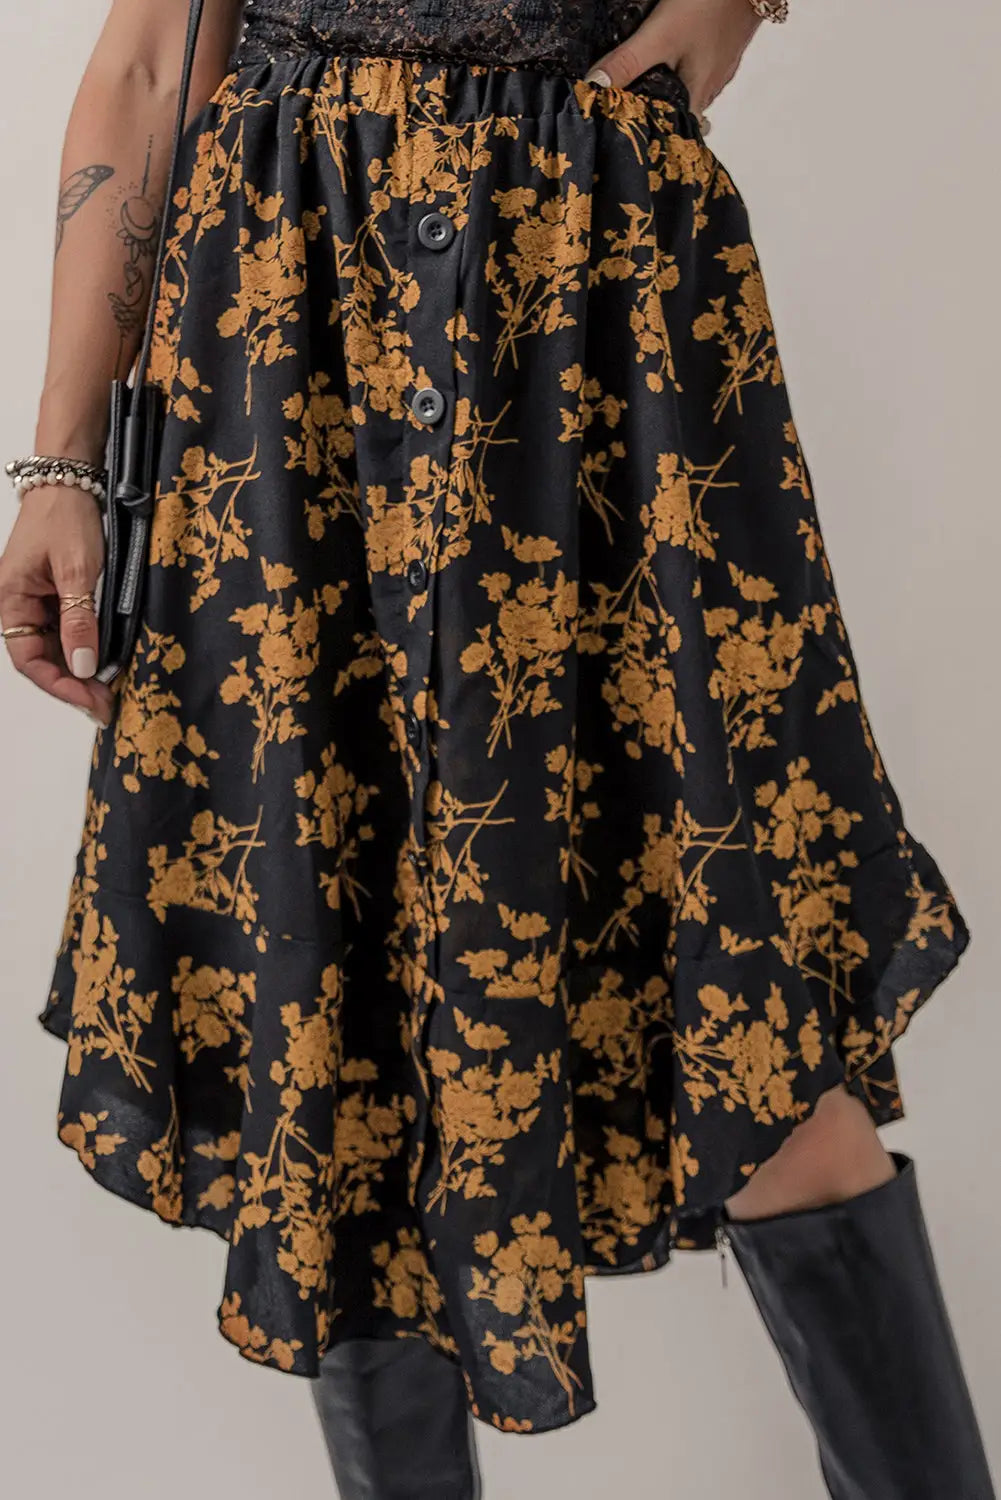 Black printed elastic waist button decor floral ruffle skirt - s / 100% polyester - skirts